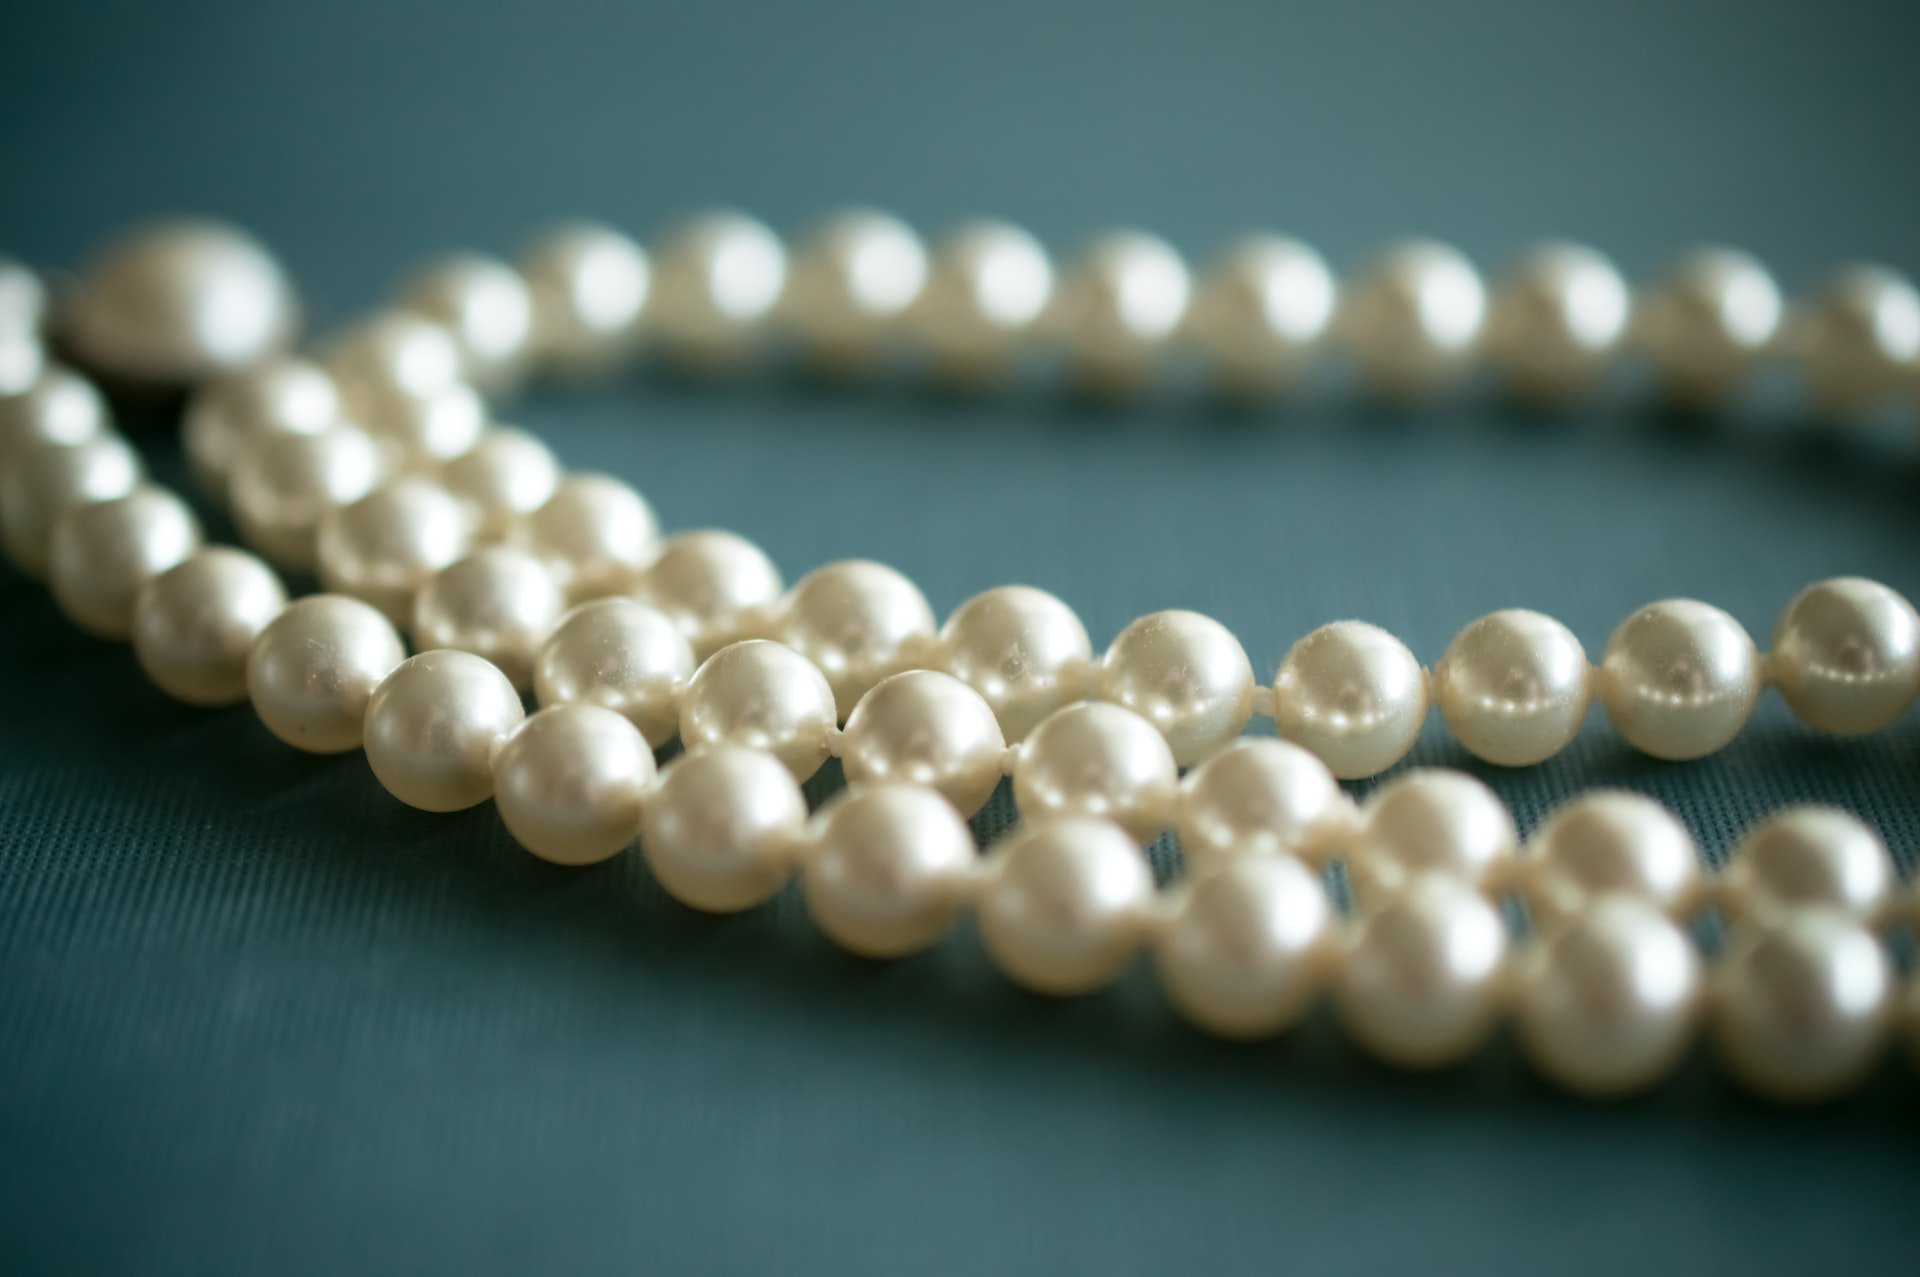 Pearl necklace (photo: Tiffany Anthony)